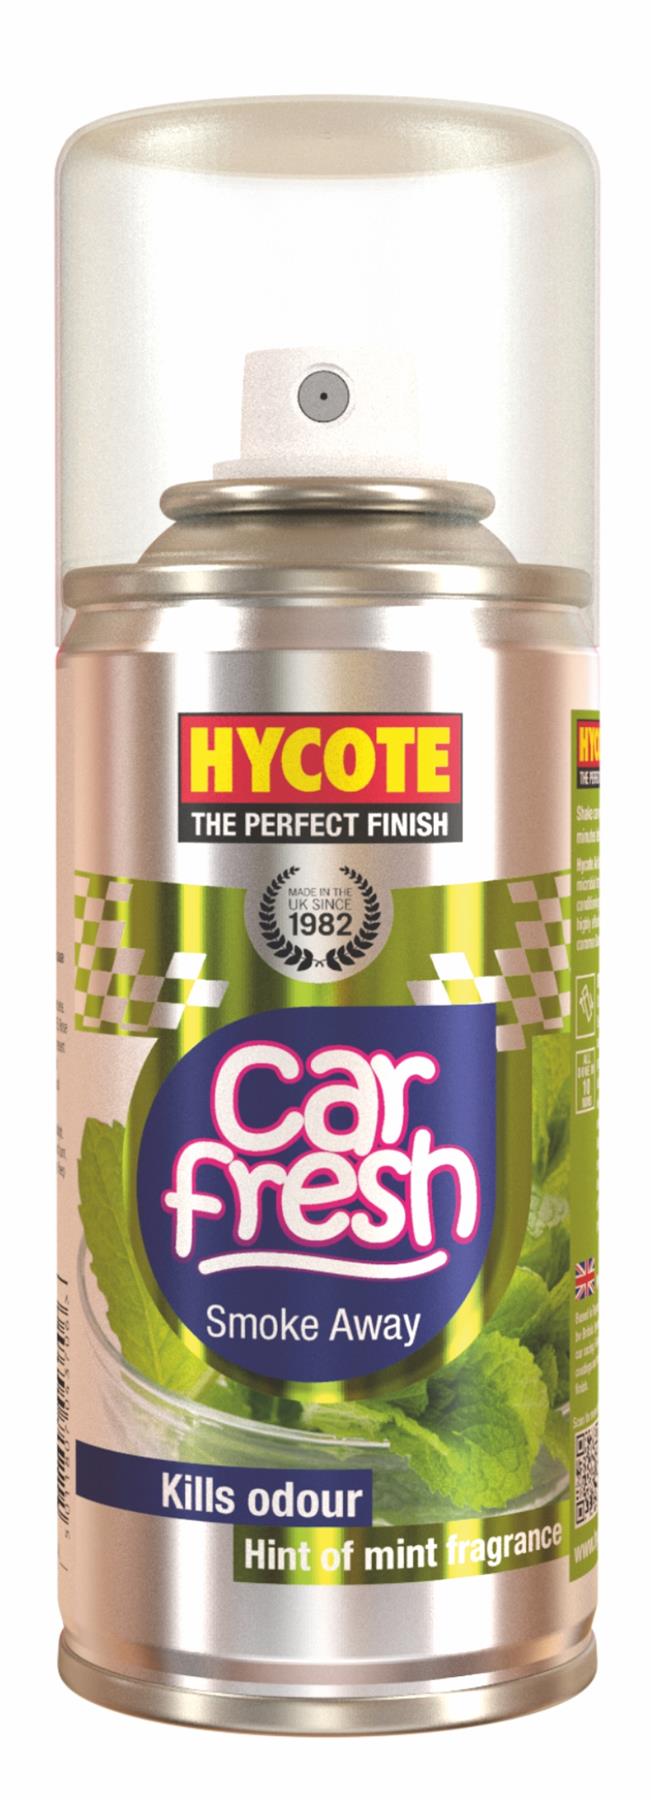 Hycote Car Fresh Air Freshener Spray Smoke Away Hint of Mint Fragrance - 150ml